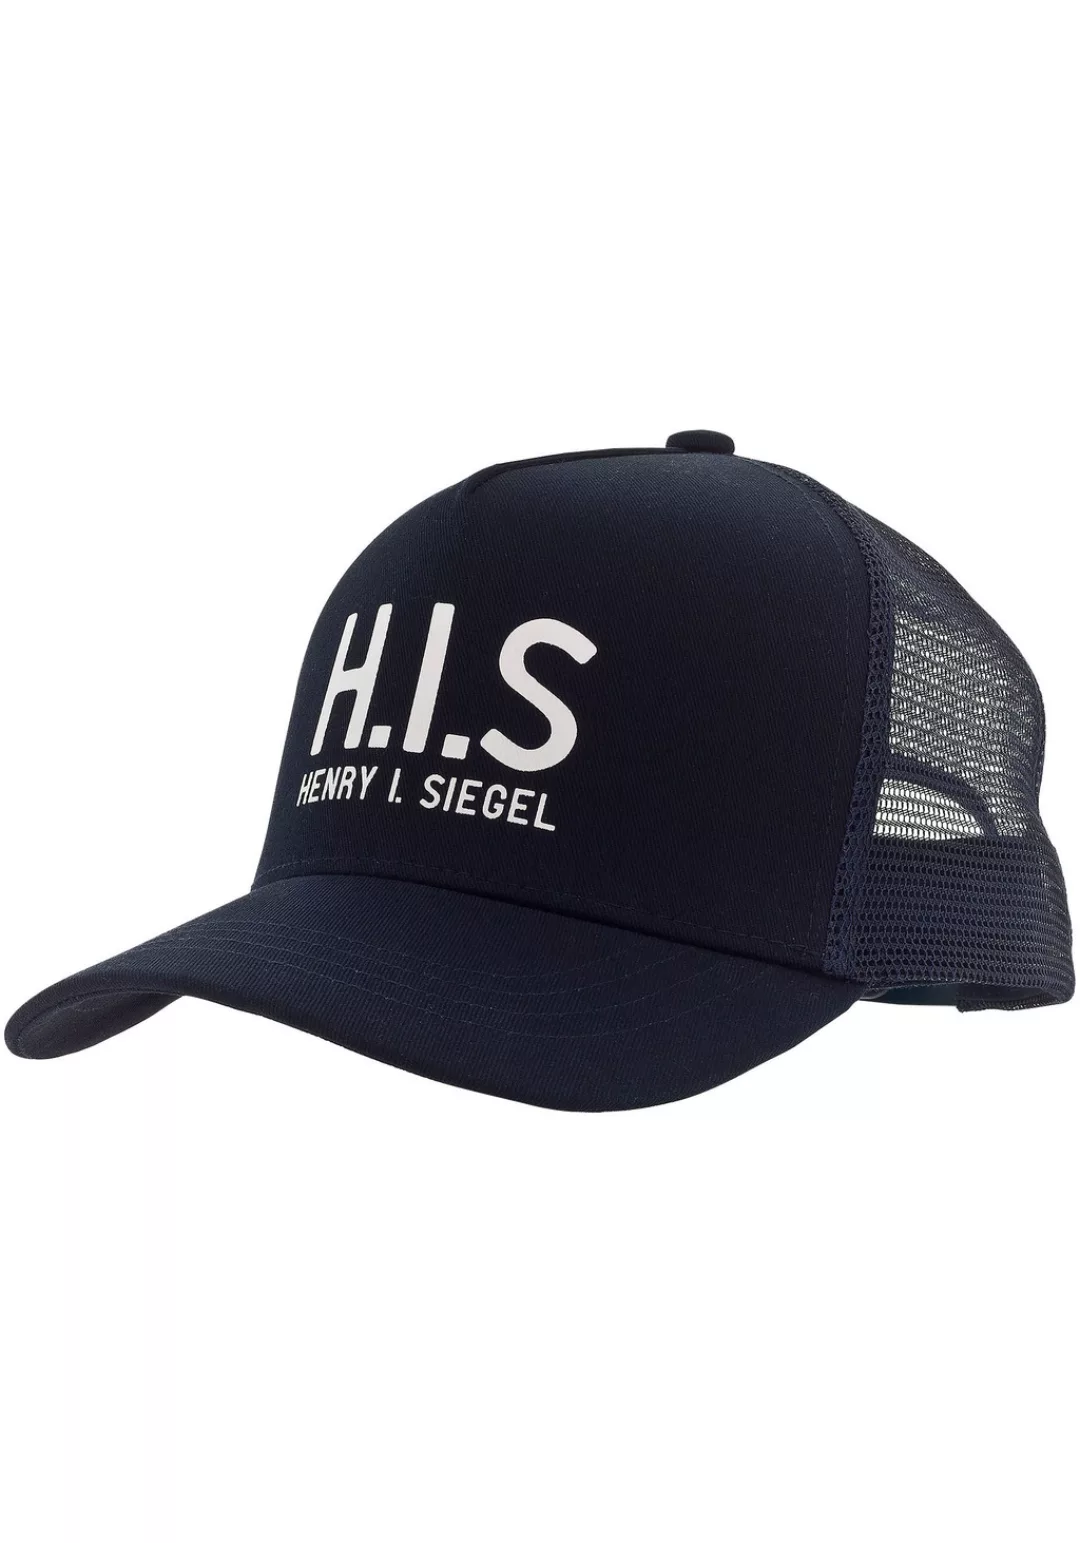 H.I.S Baseball Cap, Mesh-Cap mit H.I.S.-Print günstig online kaufen